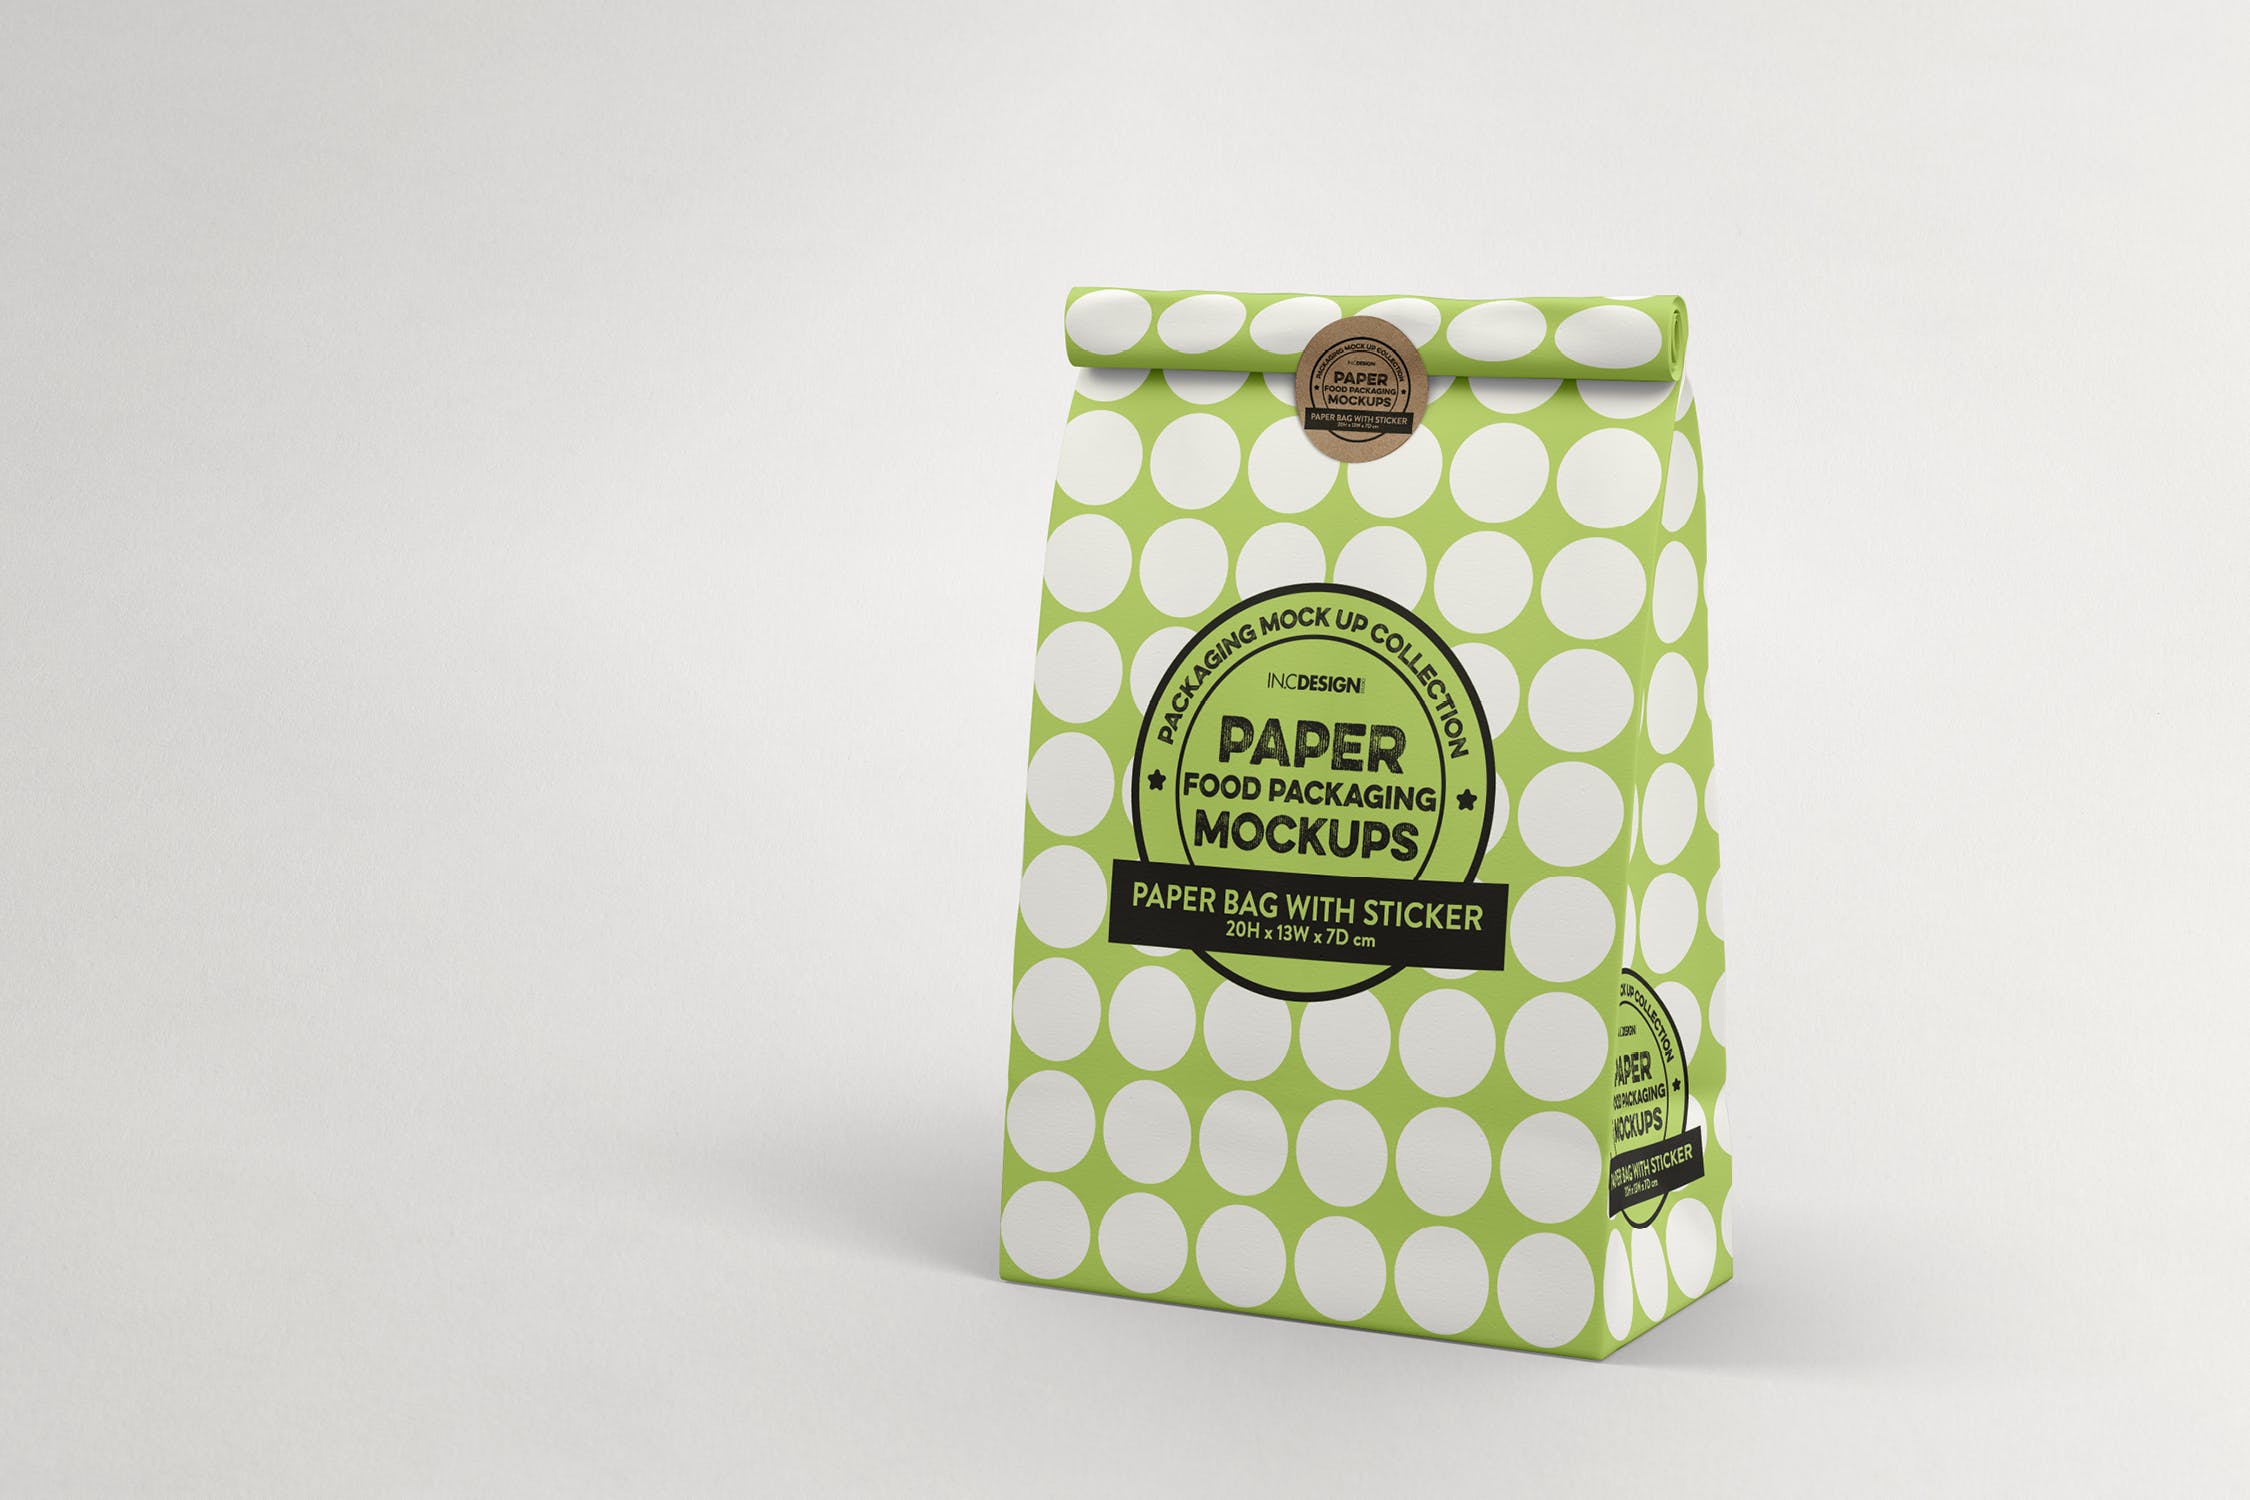 贴纸密封包装纸袋设计效果图16图库精选 Paper Bag with sticker Seal Packaging Mockup插图(2)